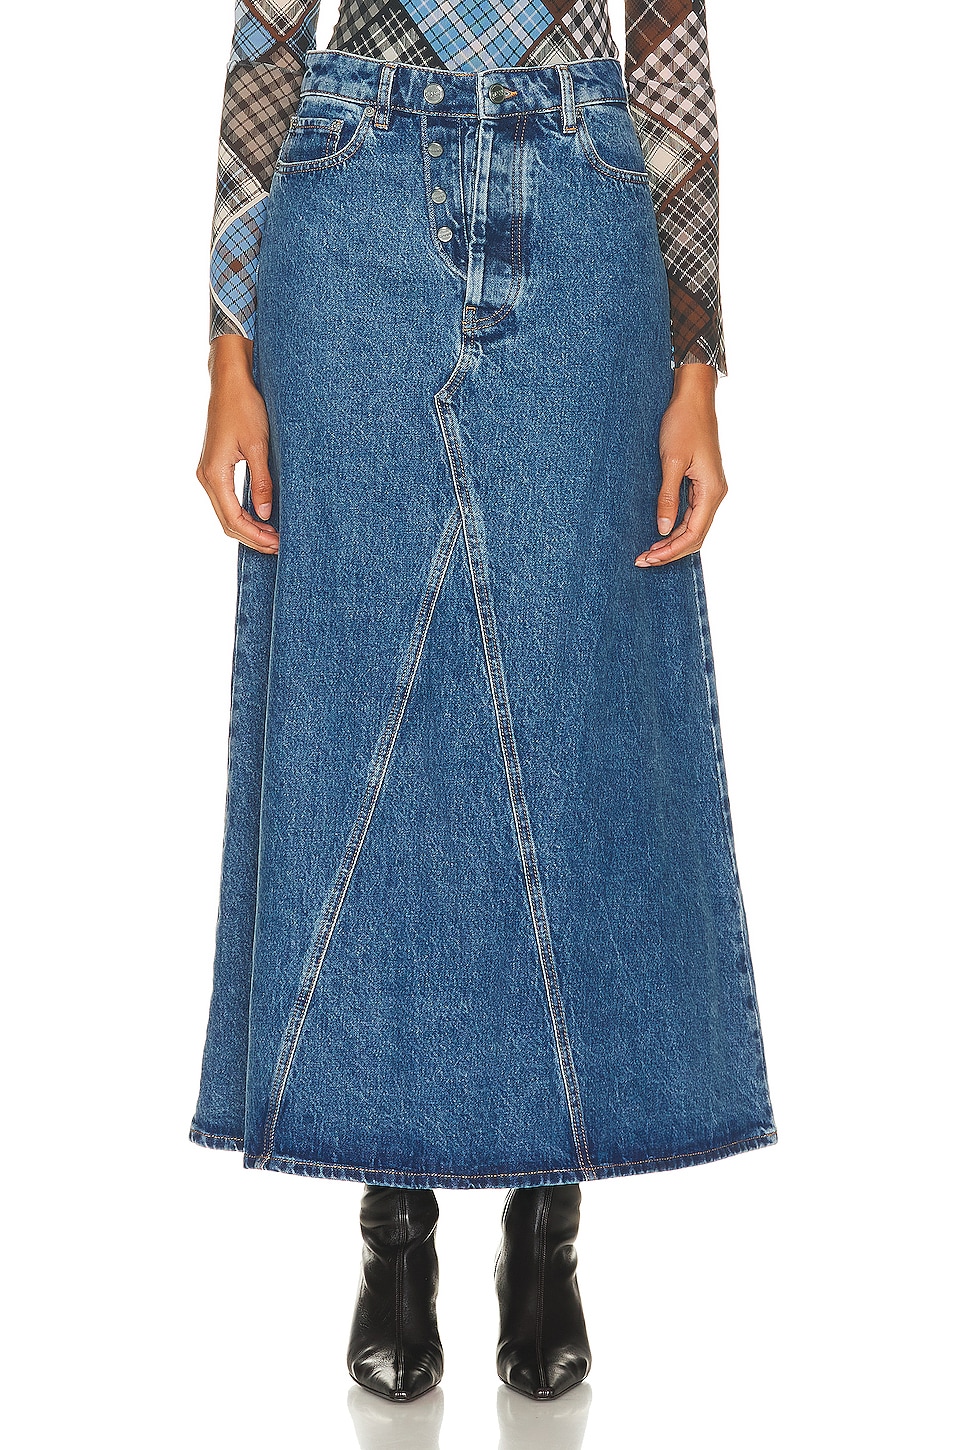 Image 1 of Ganni Denim Maxi Skirt in Mid Blue Stone